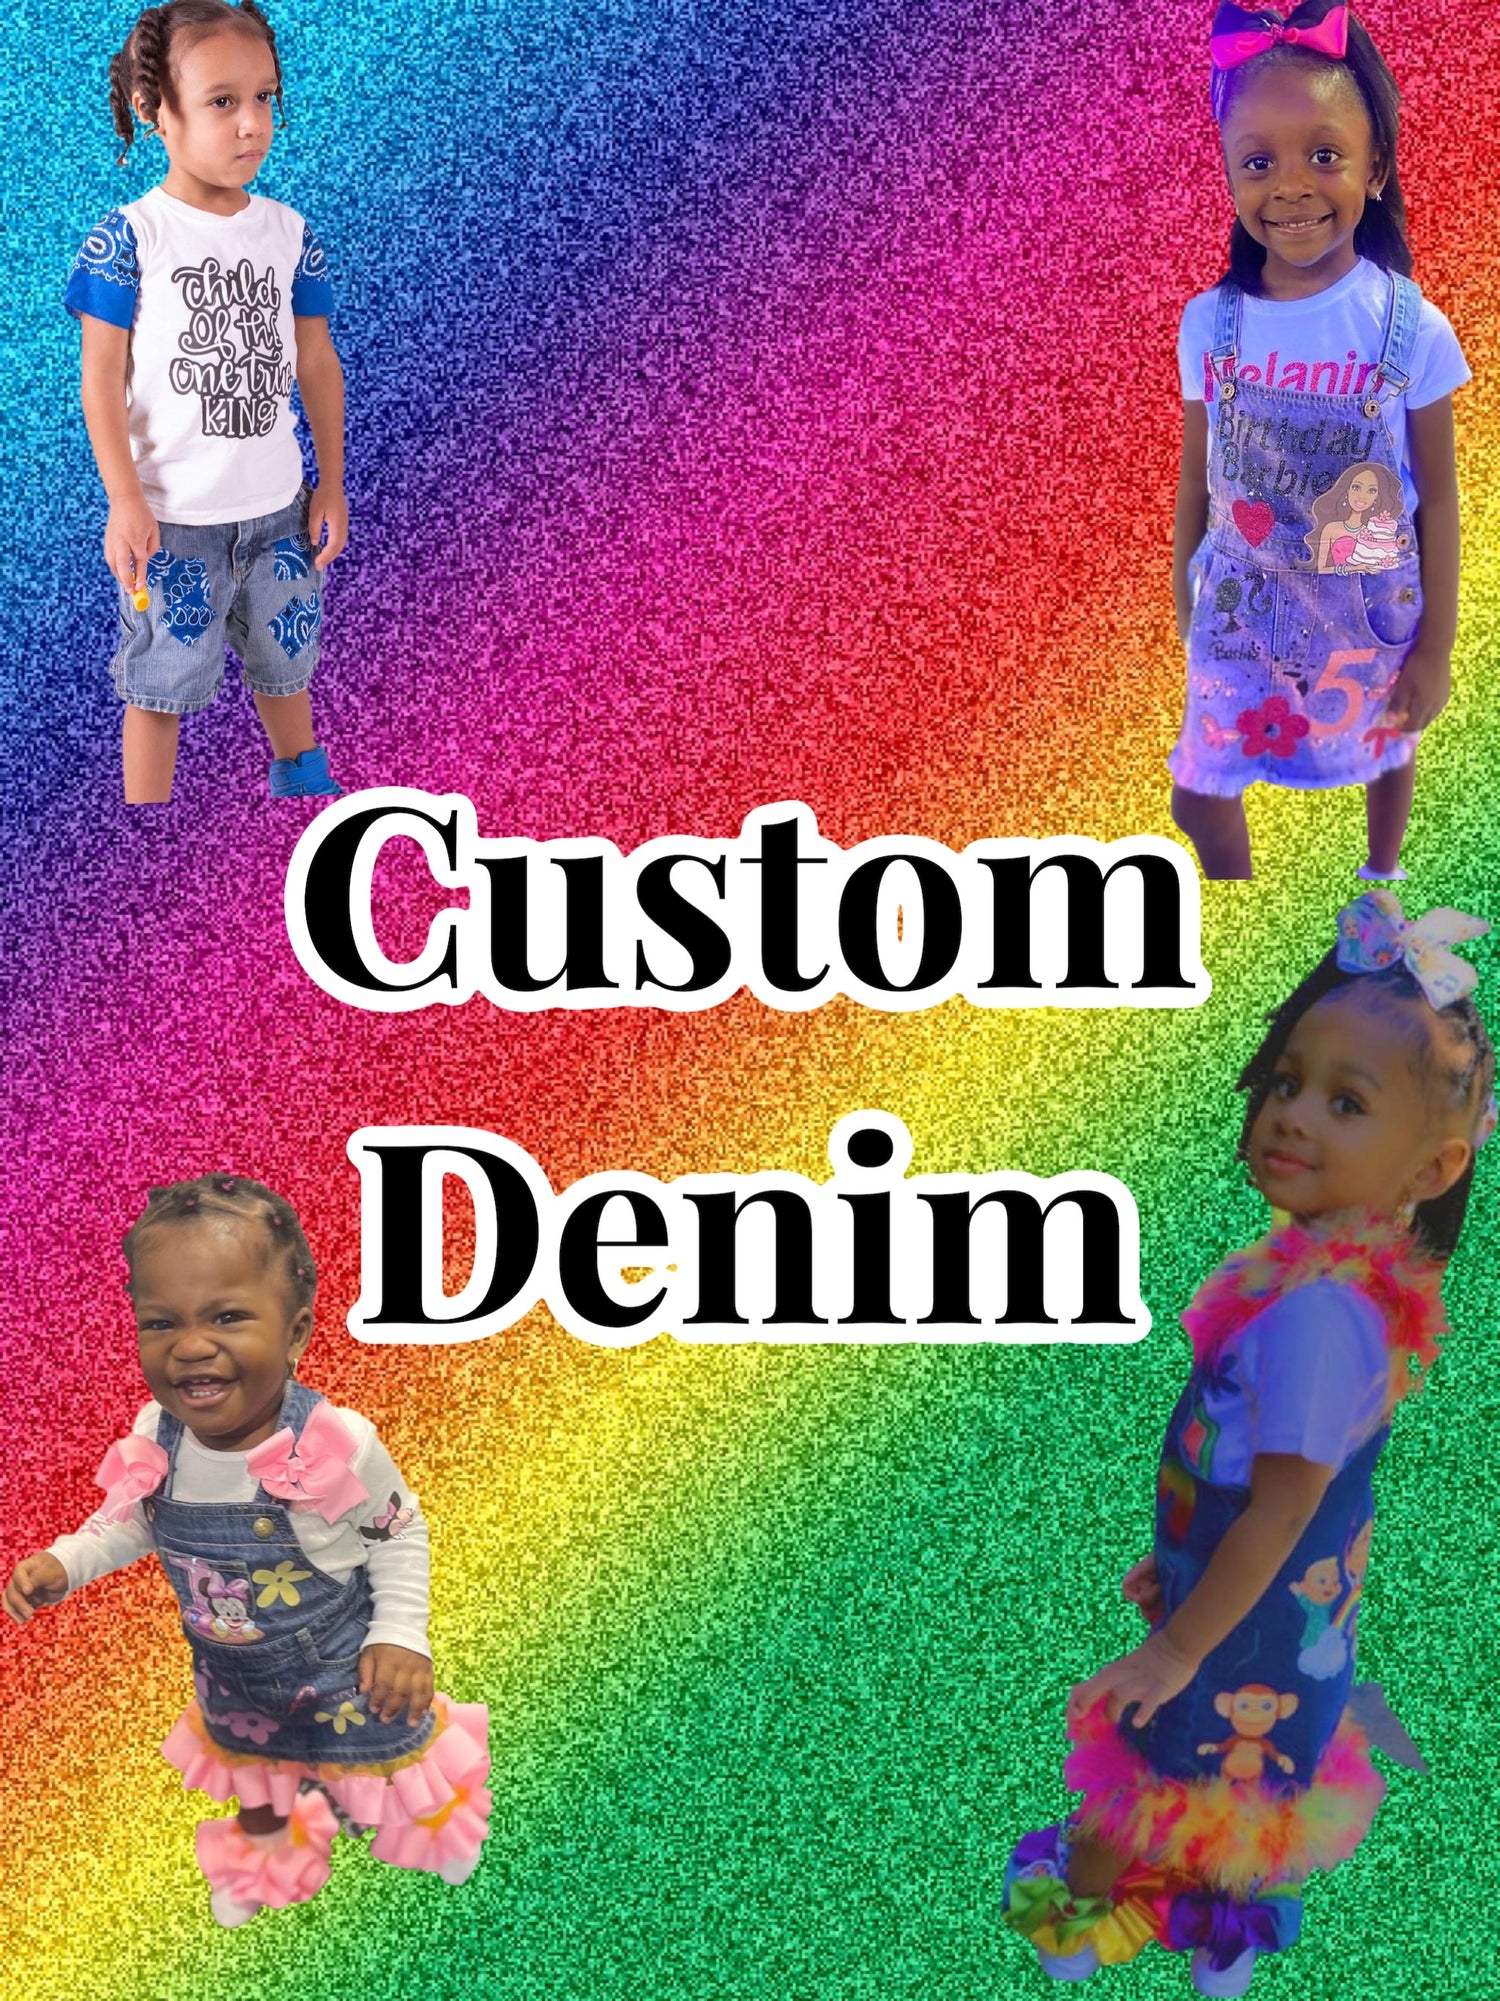 Custom denim